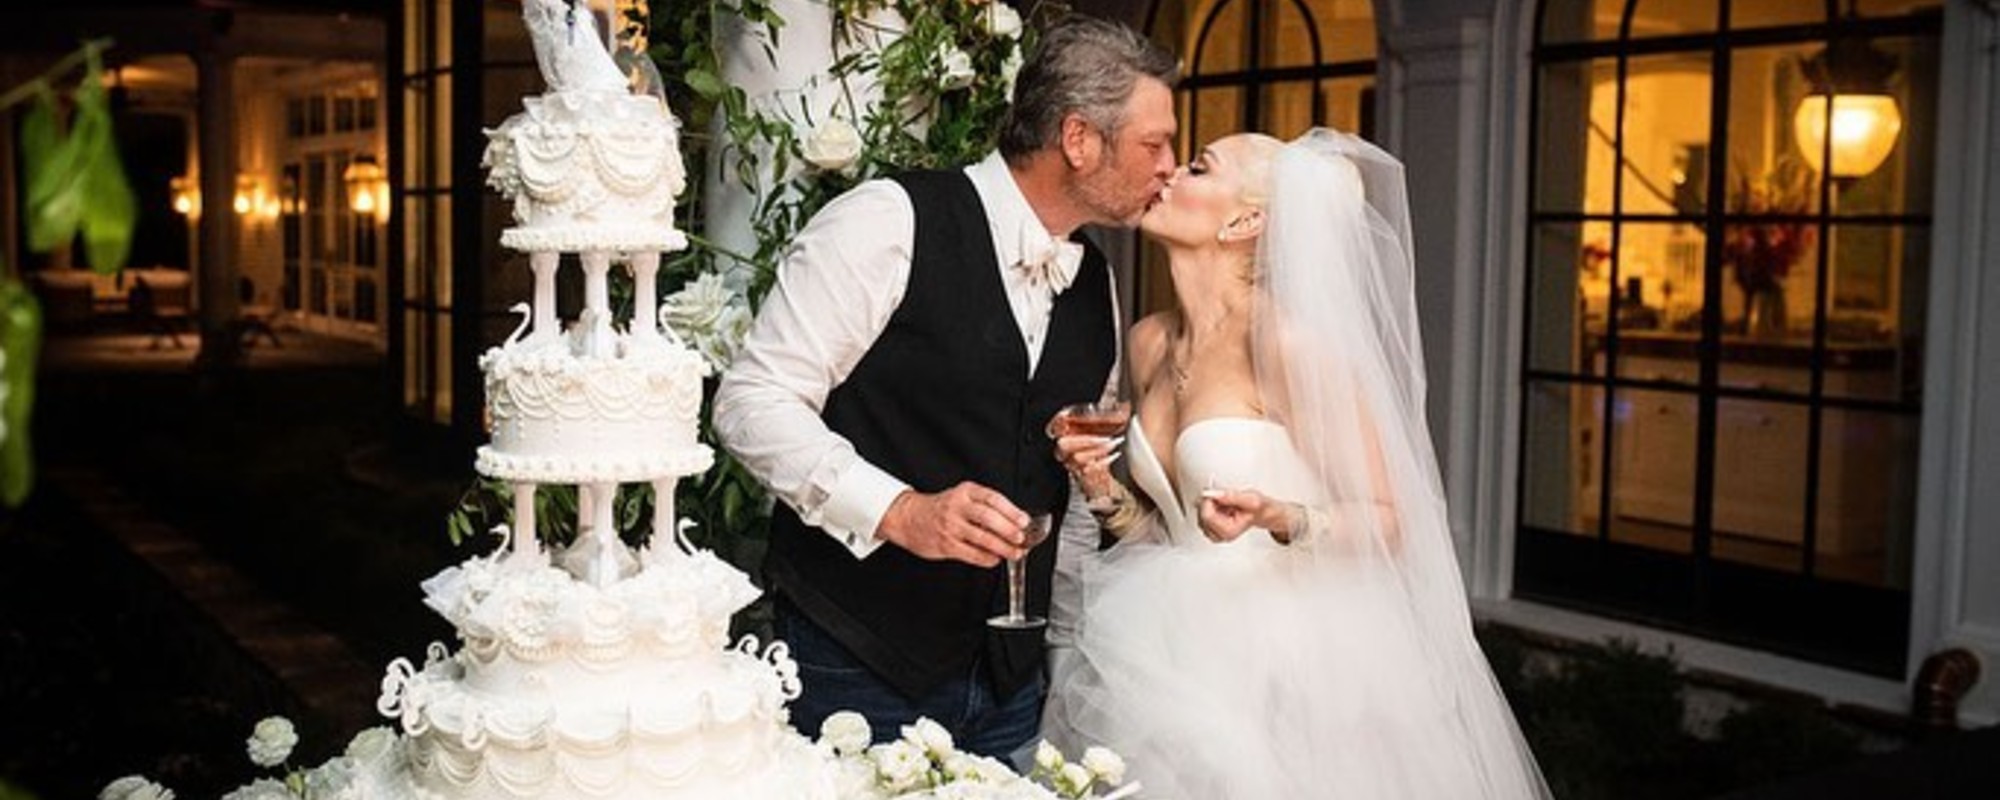 Blake Shelton & Gwen Stefani Wed In Private Ceremony